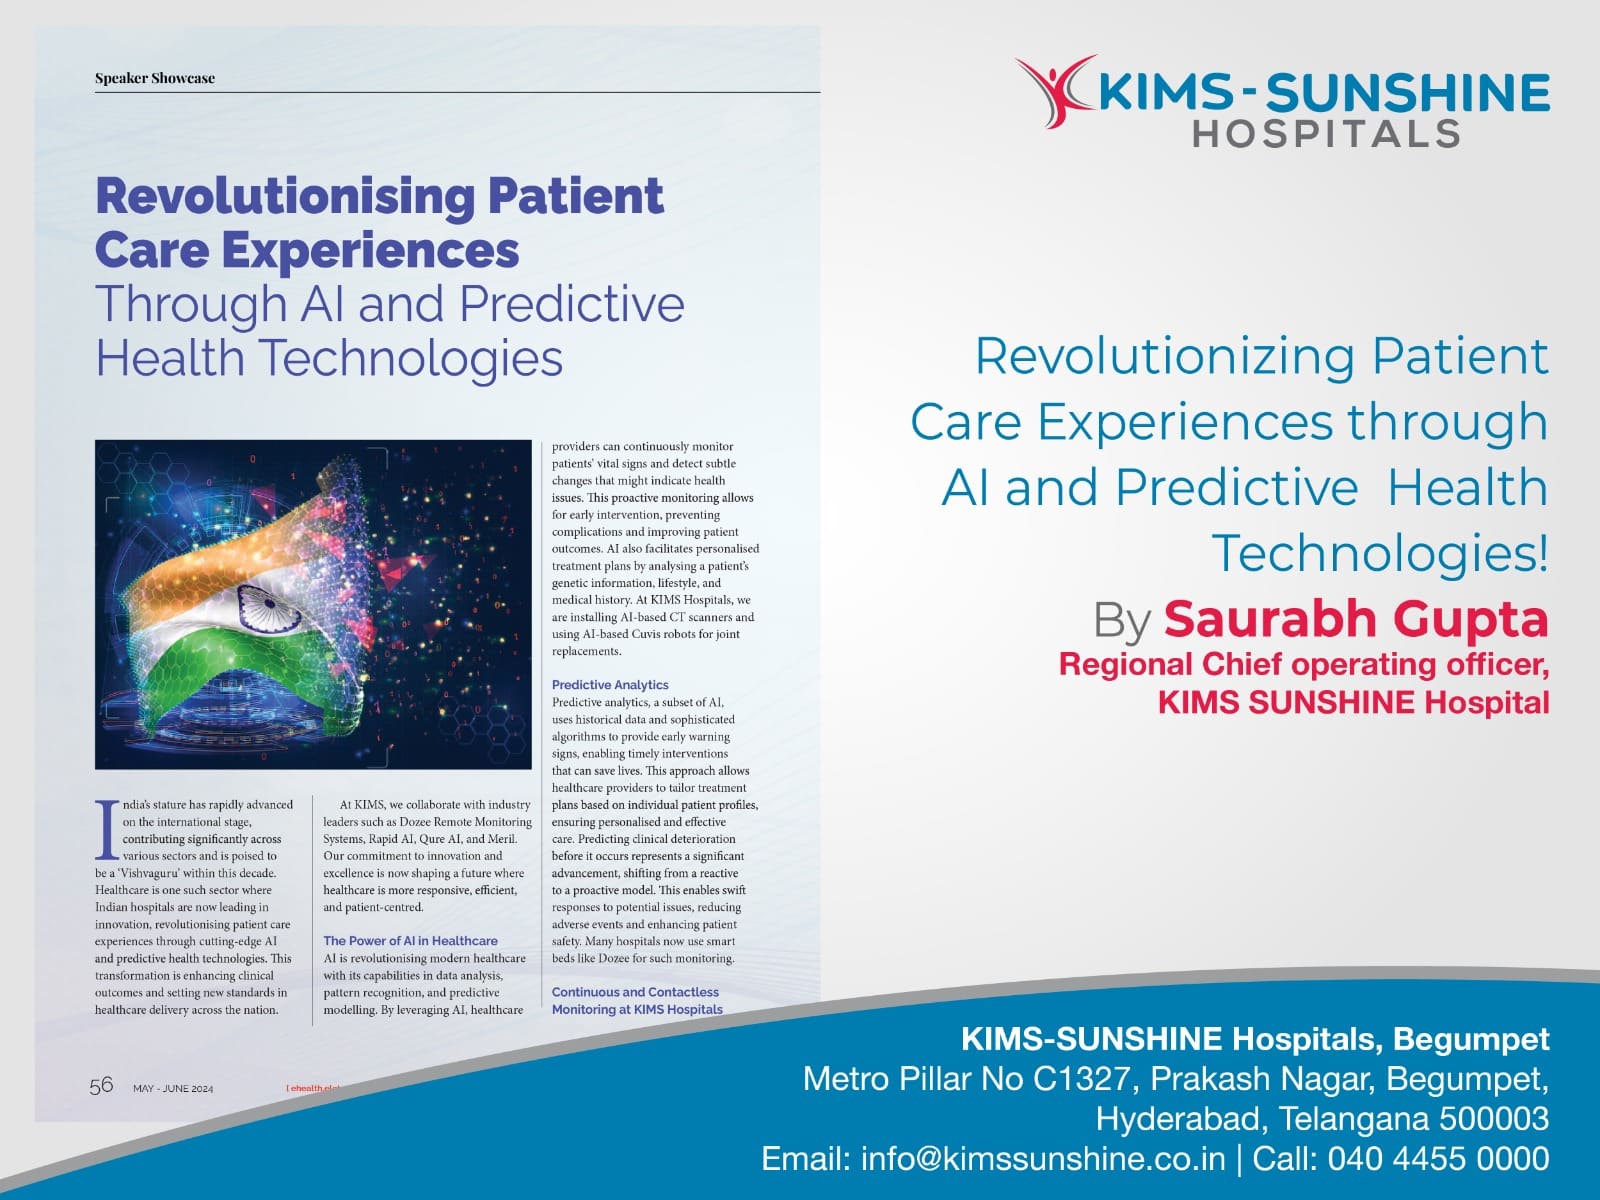 Revolutionizing Patient Care Experiences through Al and Predictive Health Technologies! By Saurabh Gupta